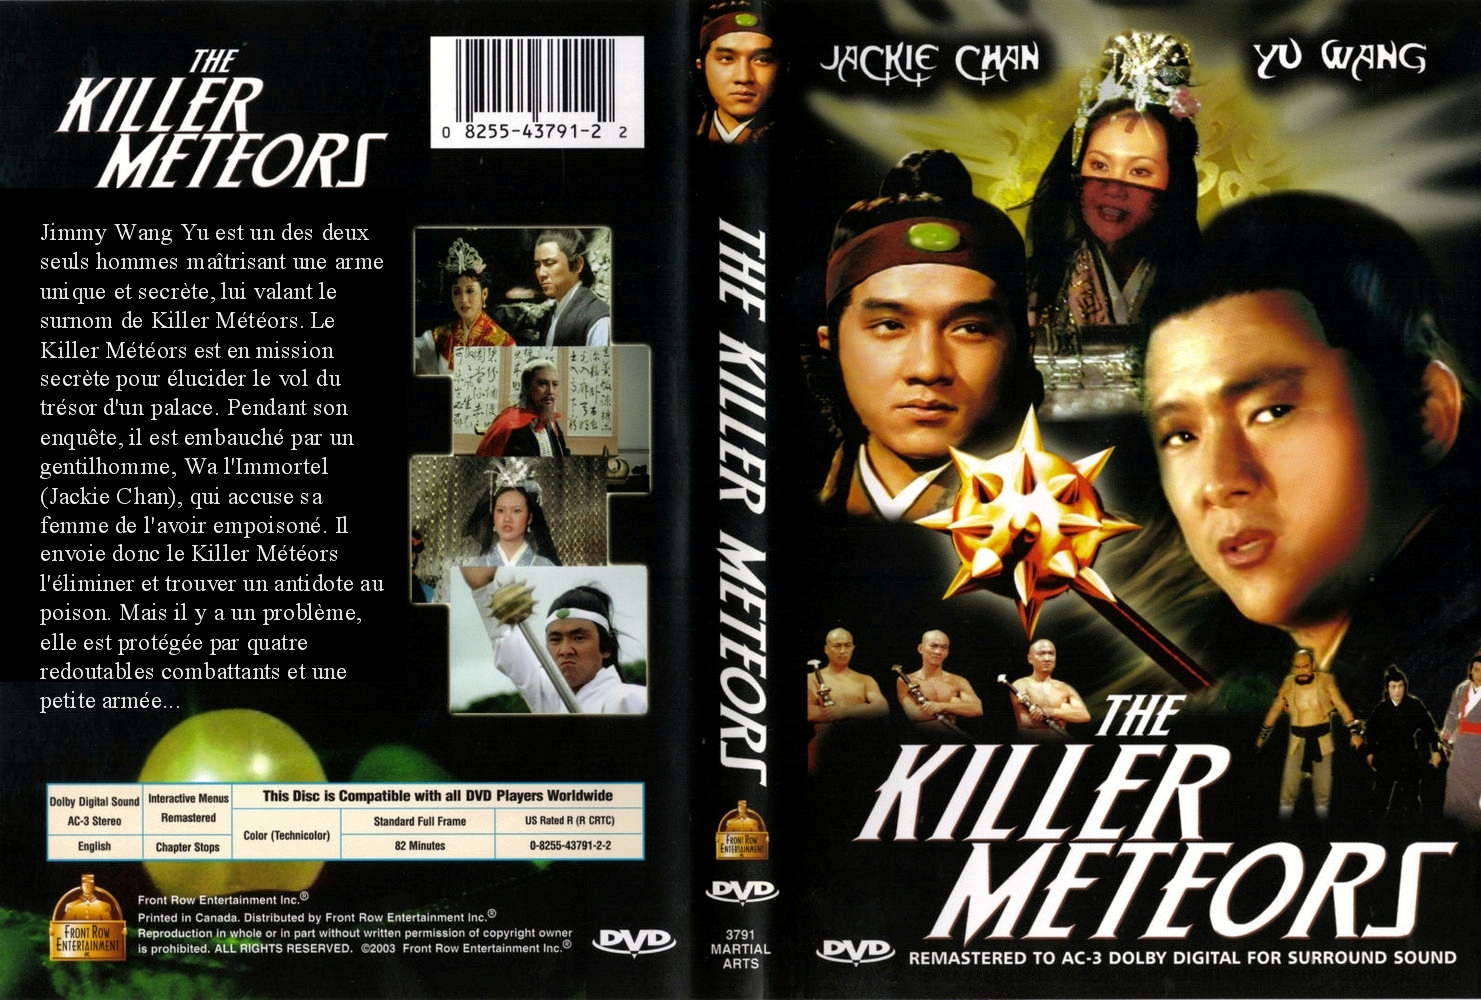 Jaquette DVD The killer meteors custom